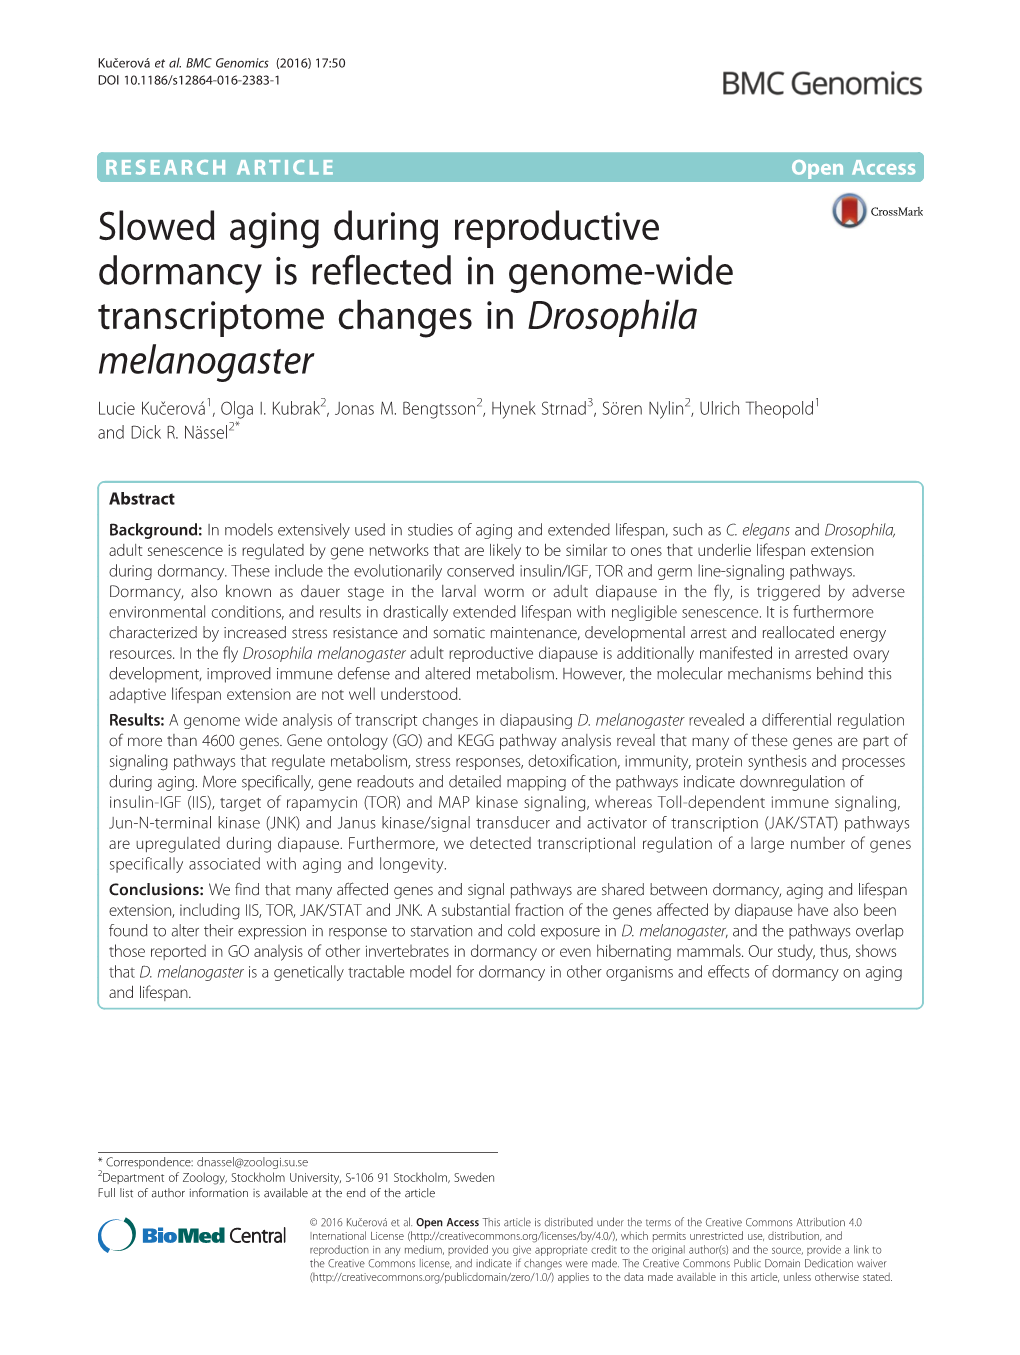 Slowed Aging During Reproductive Dormancy Is Reflected in Genome-Wide Transcriptome Changes in Drosophila Melanogaster Lucie Kučerová1, Olga I